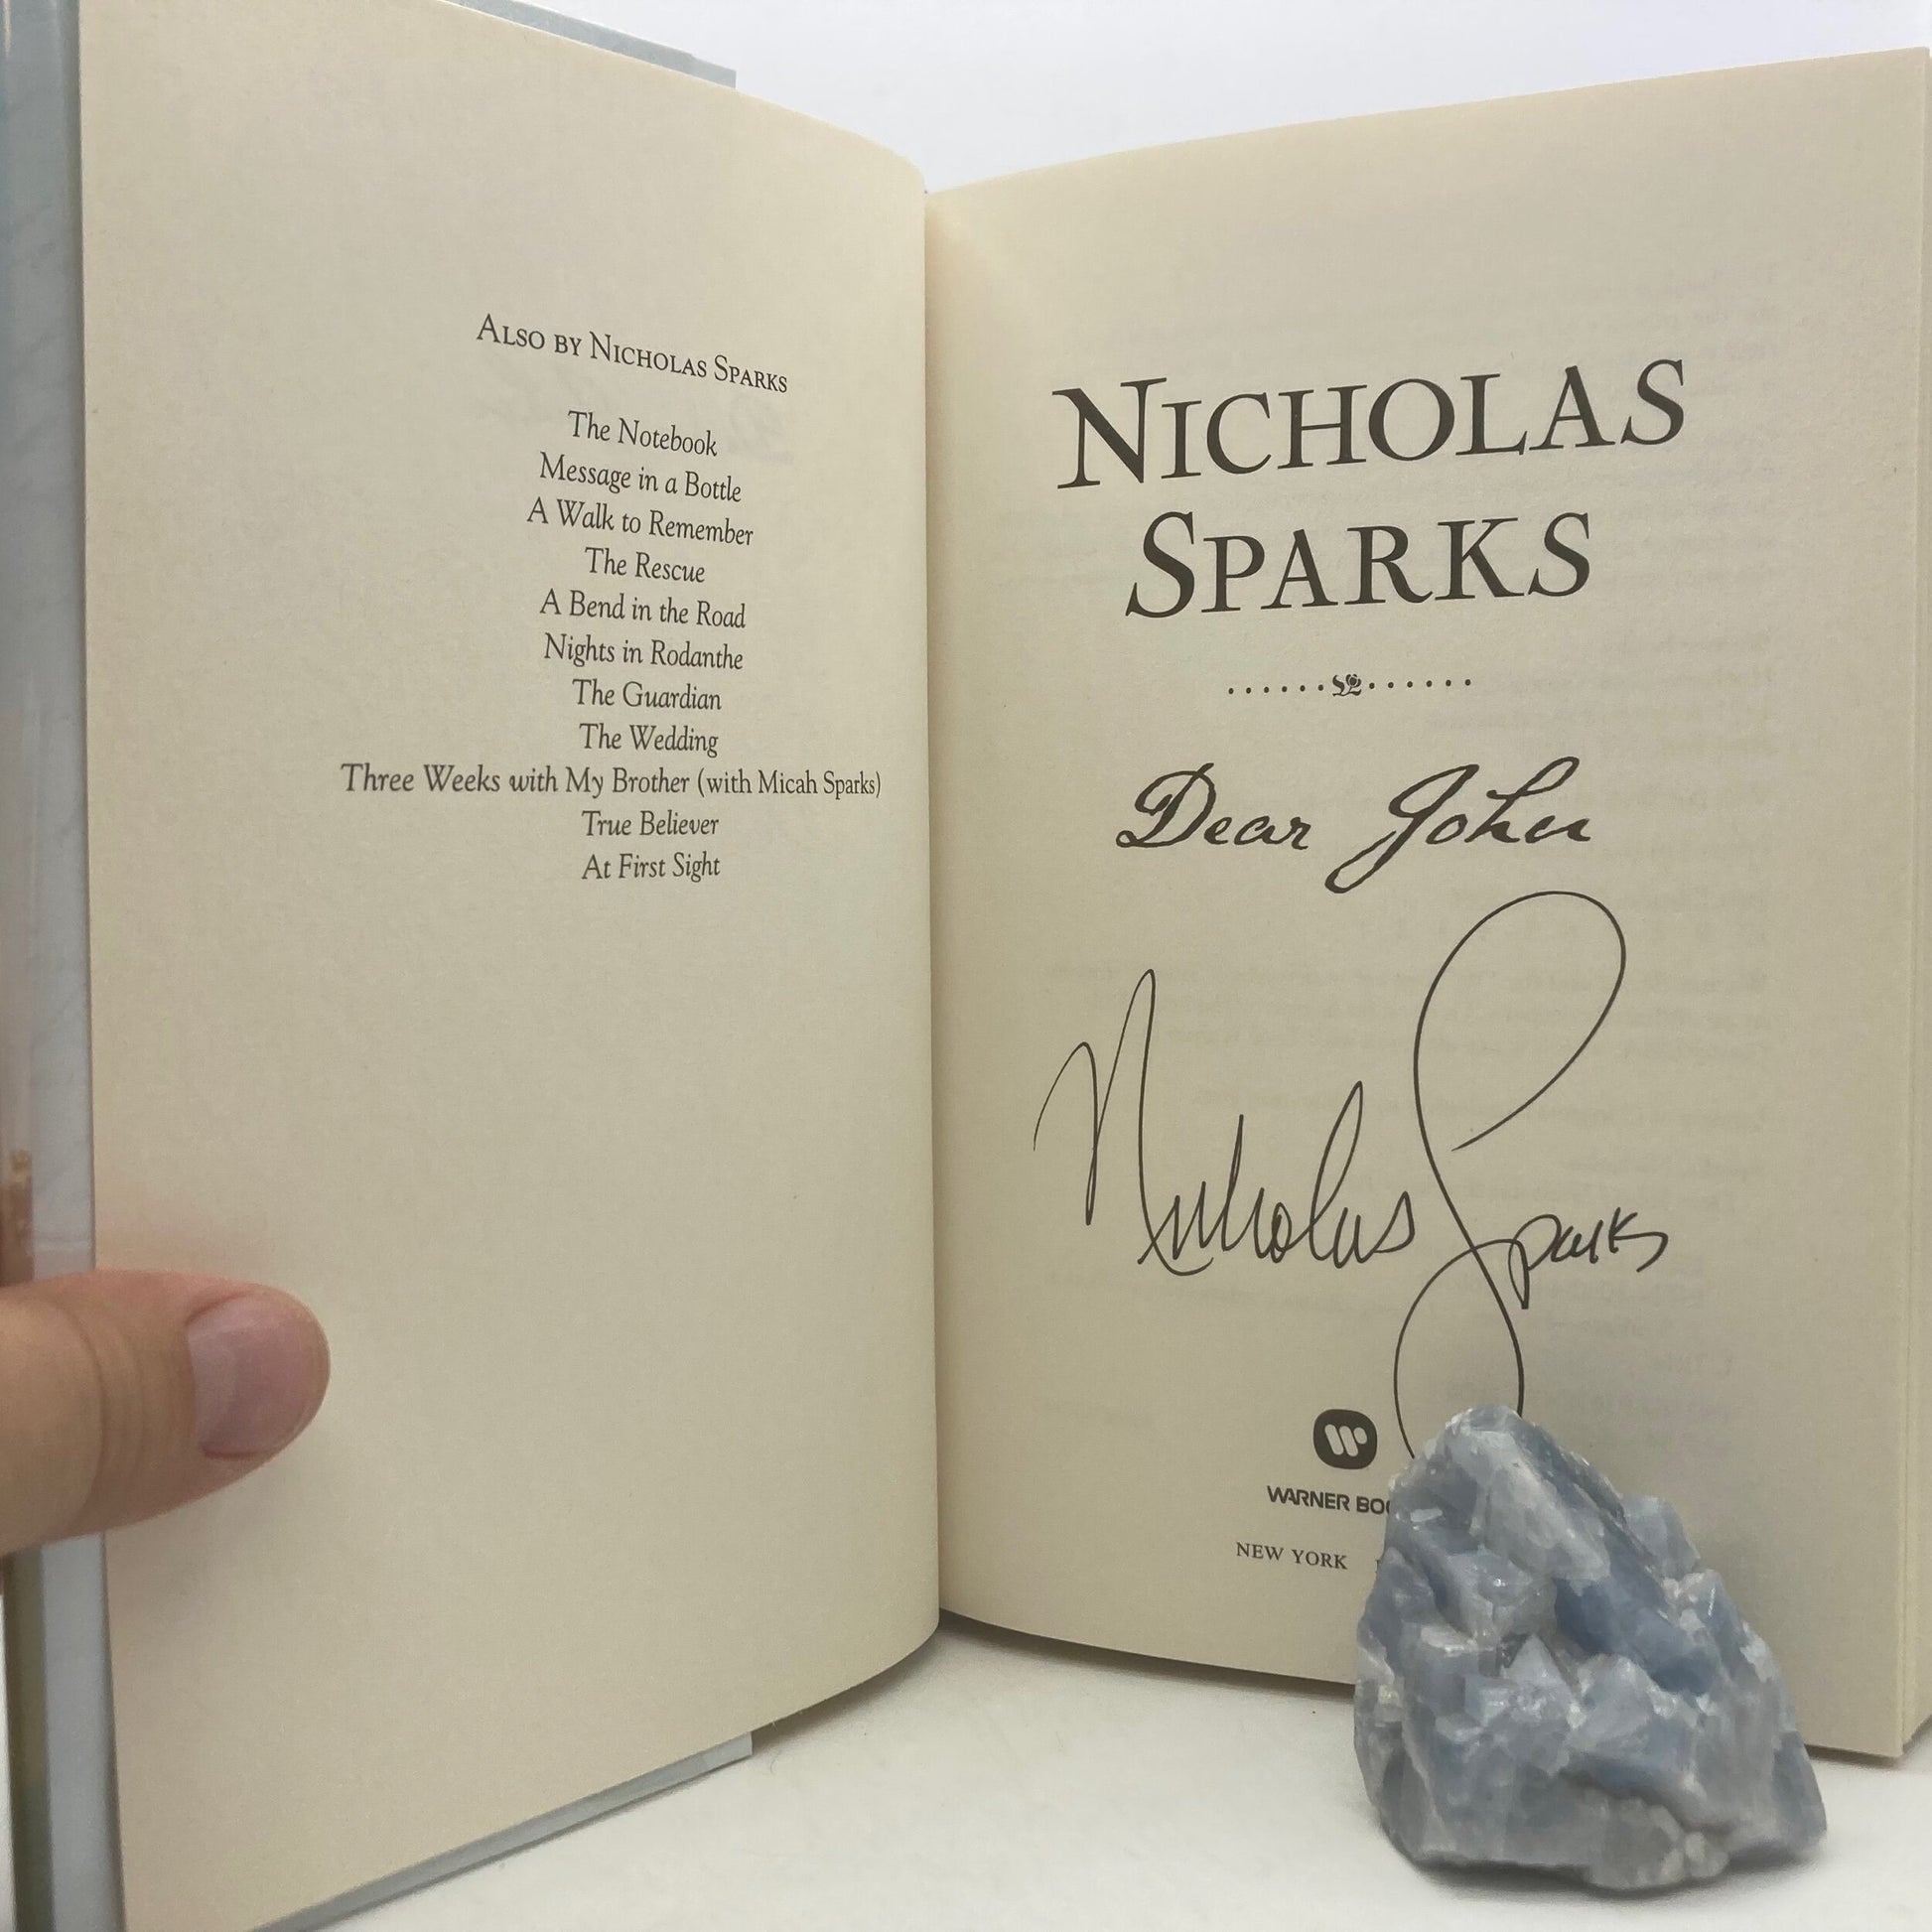 SPARKS, Nicholas "Dear John" [Warner, 2006] 1st Edition (Signed) - Buzz Bookstore